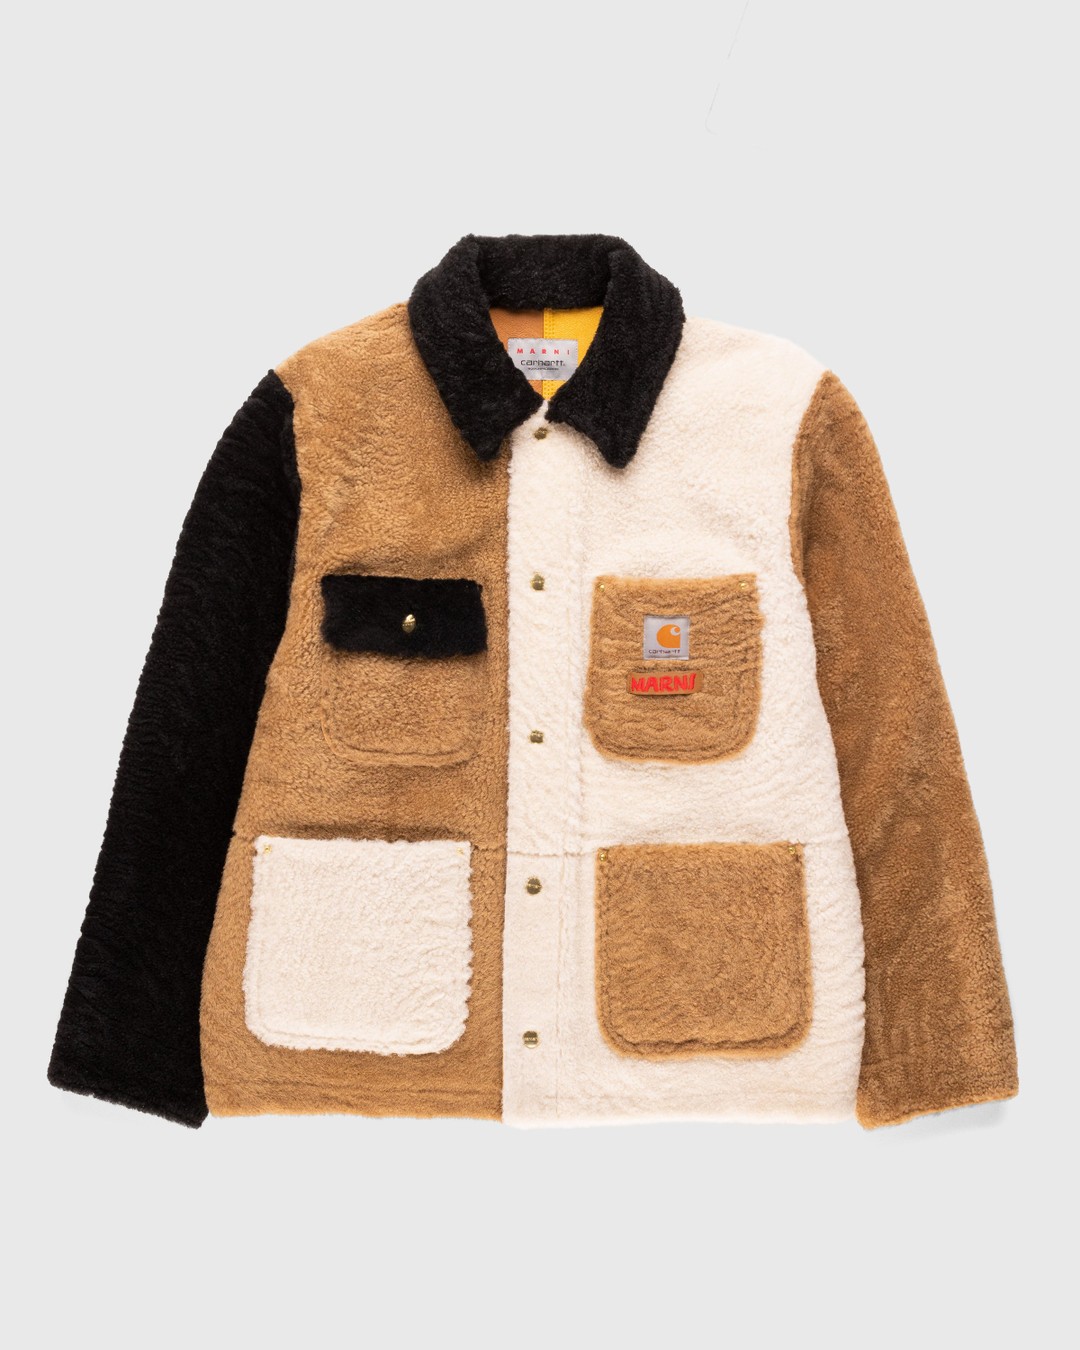 Marni x Carhartt WIP – Reversible Shearling Jacket Brown - Outerwear - Brown - Image 1